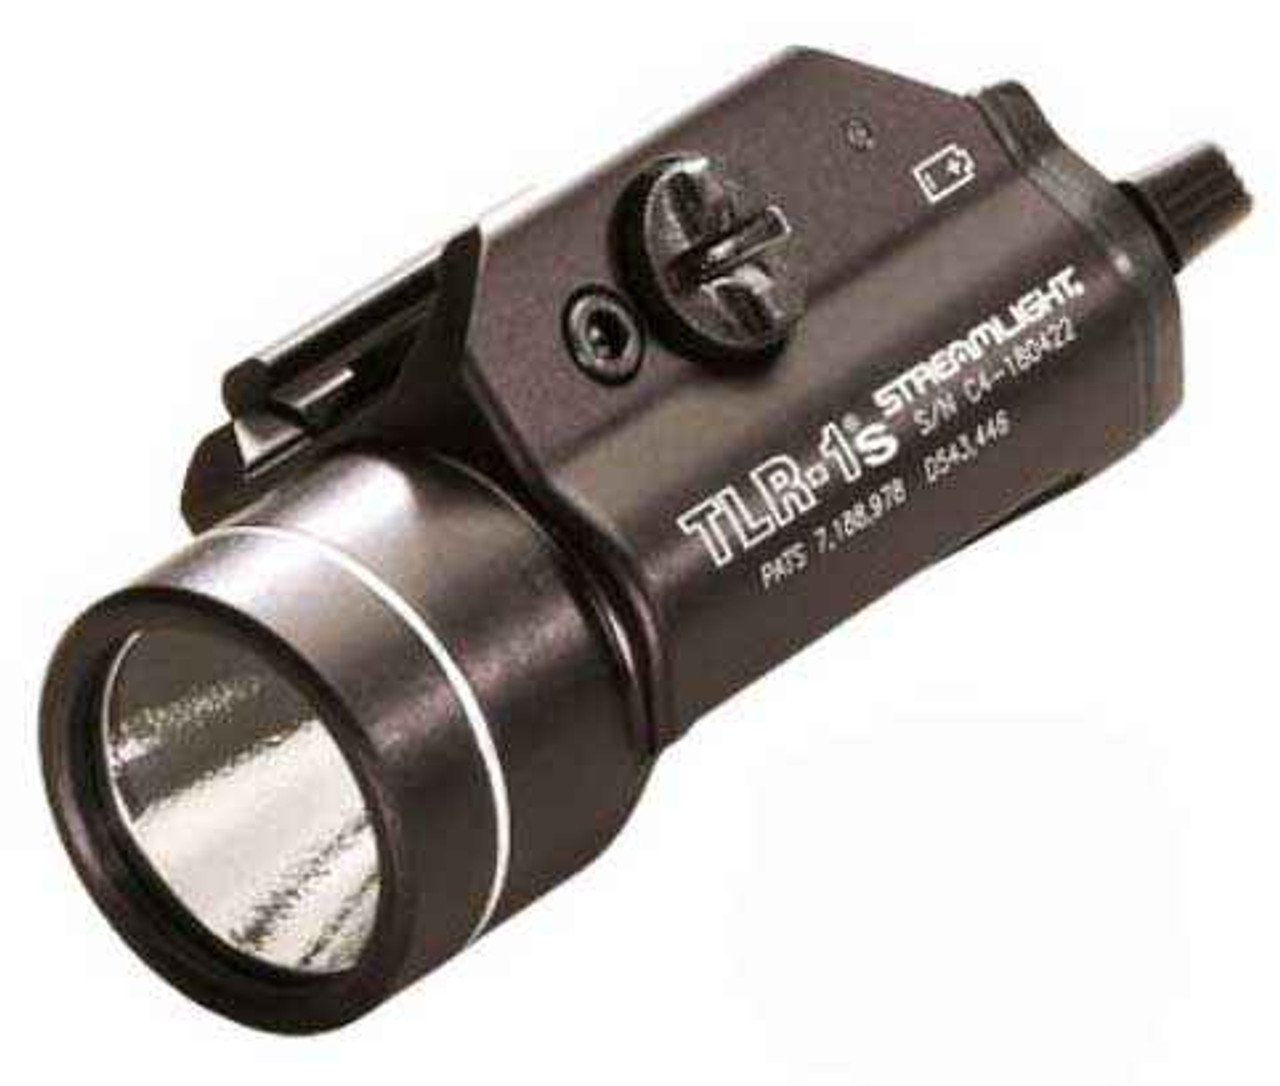 Streamlight TLR-1s, C4 LED with blinding beam (300 lumens)